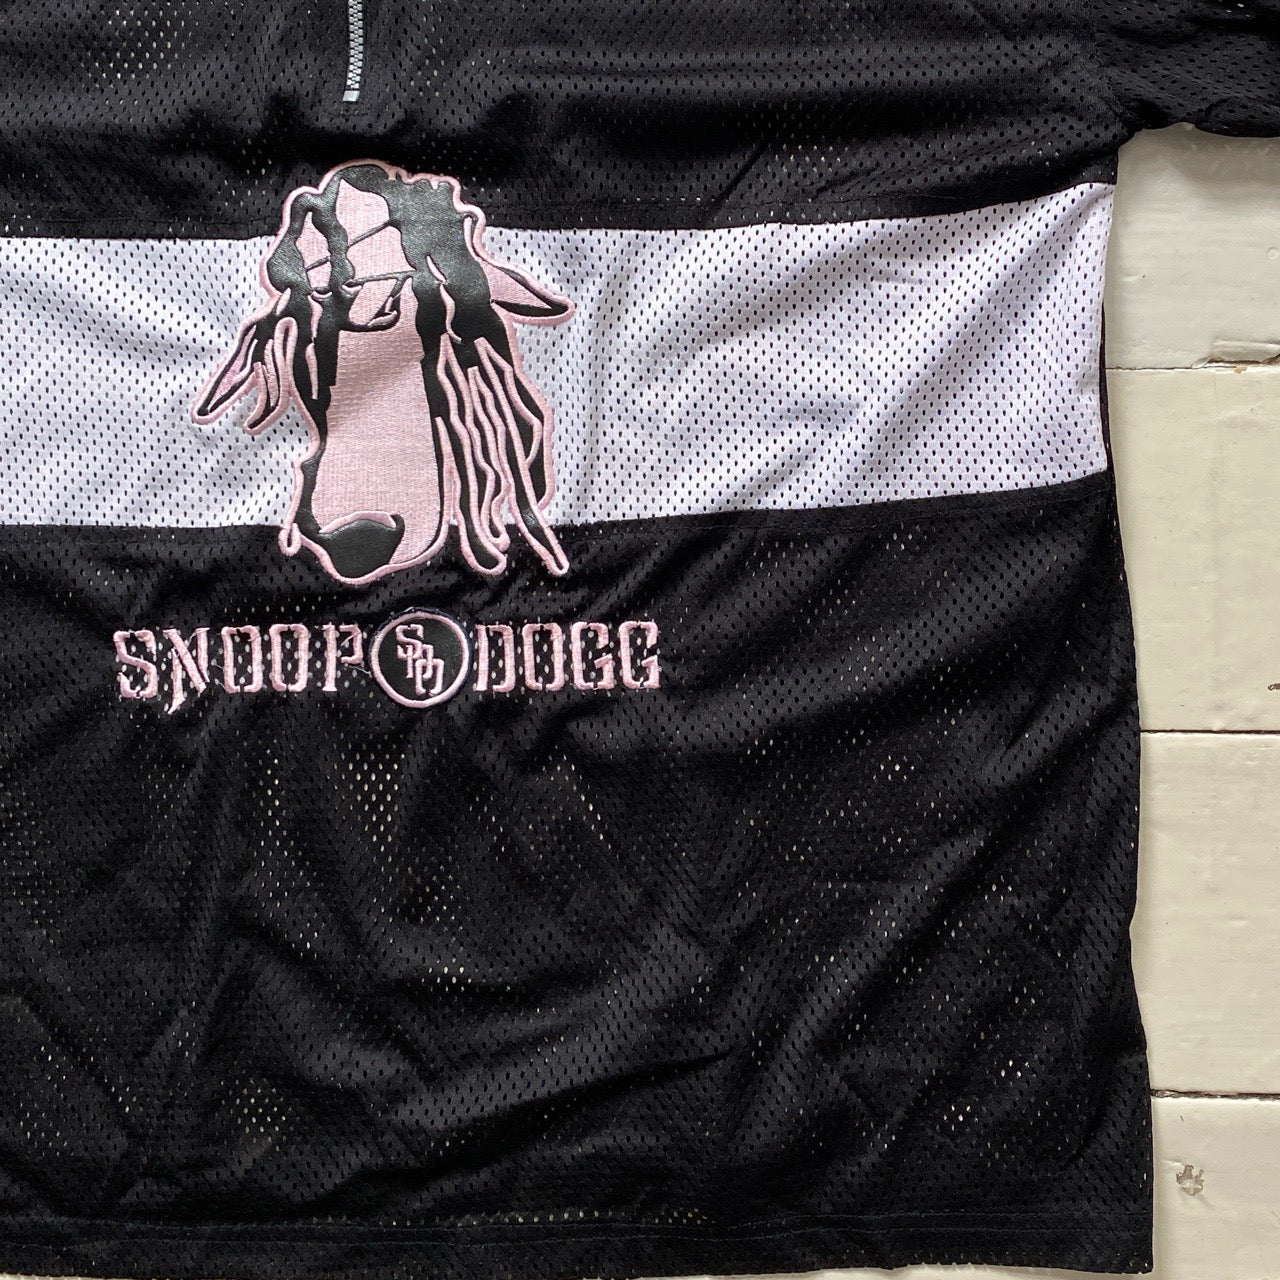 Snoop Dogg Clothing Vintage Zip Up Jersey (XL)